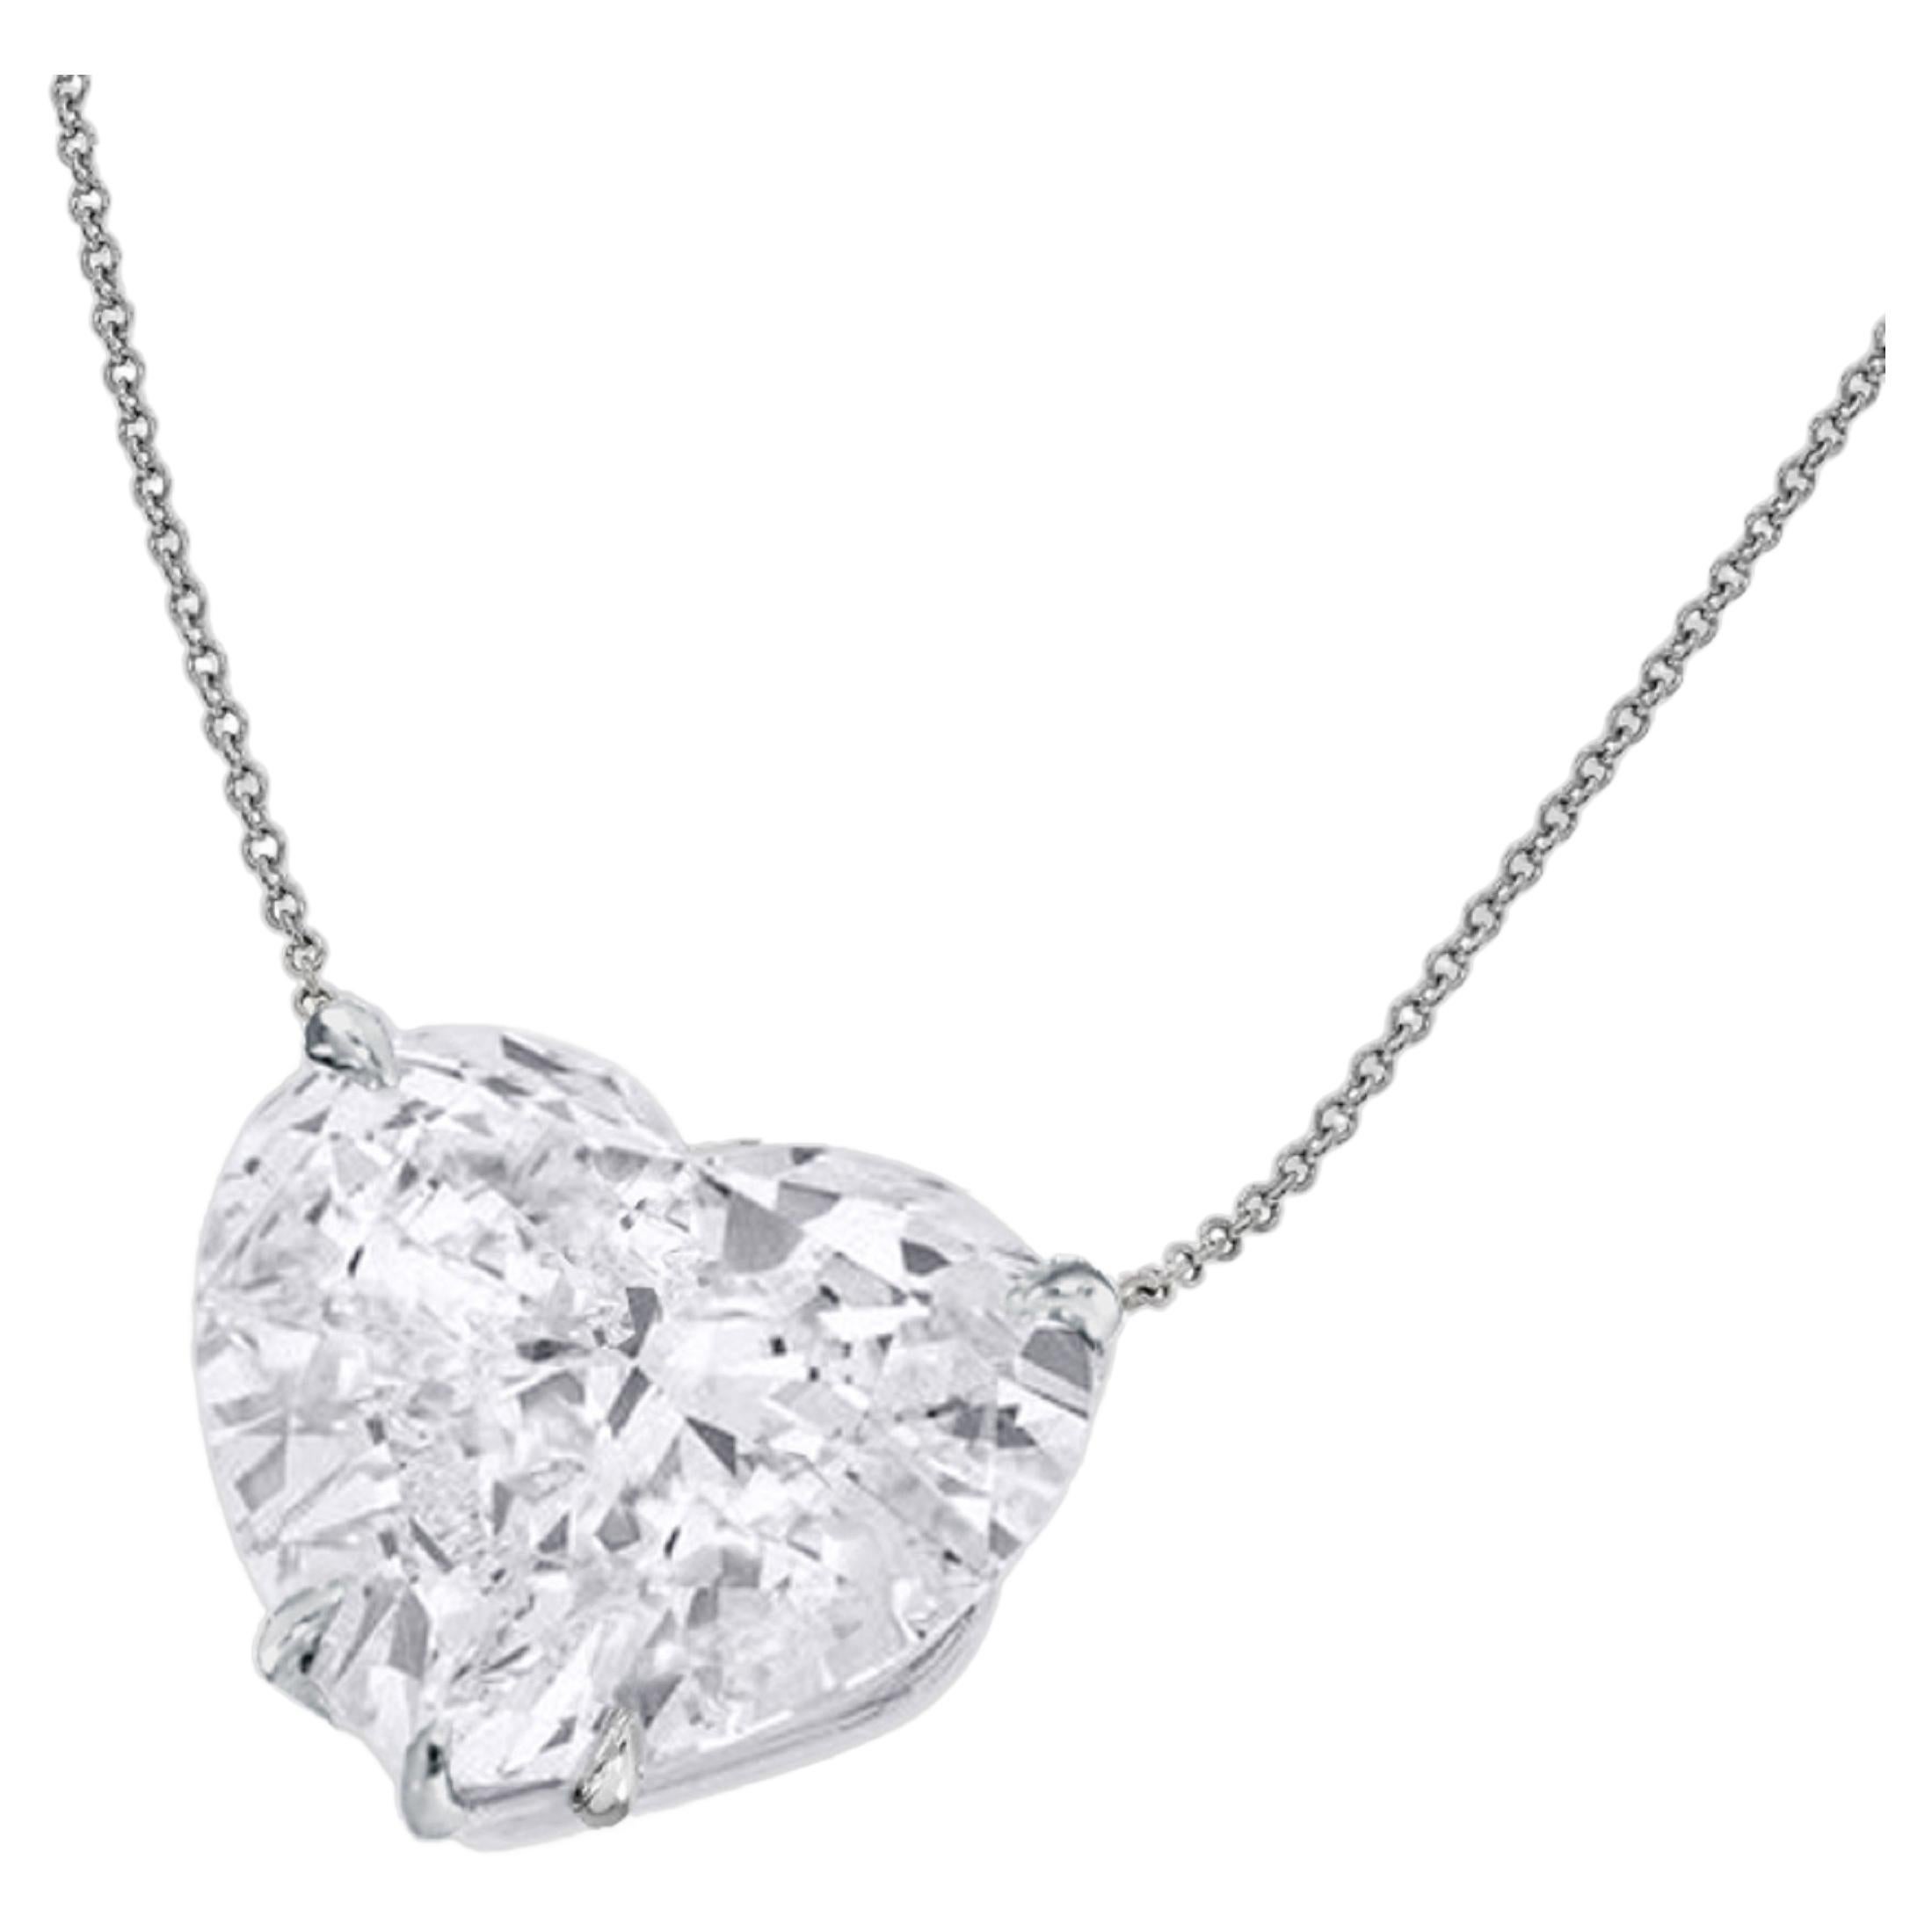 Flawless GIA Certified Heart Shape 5.03 Carat Diamond Necklace